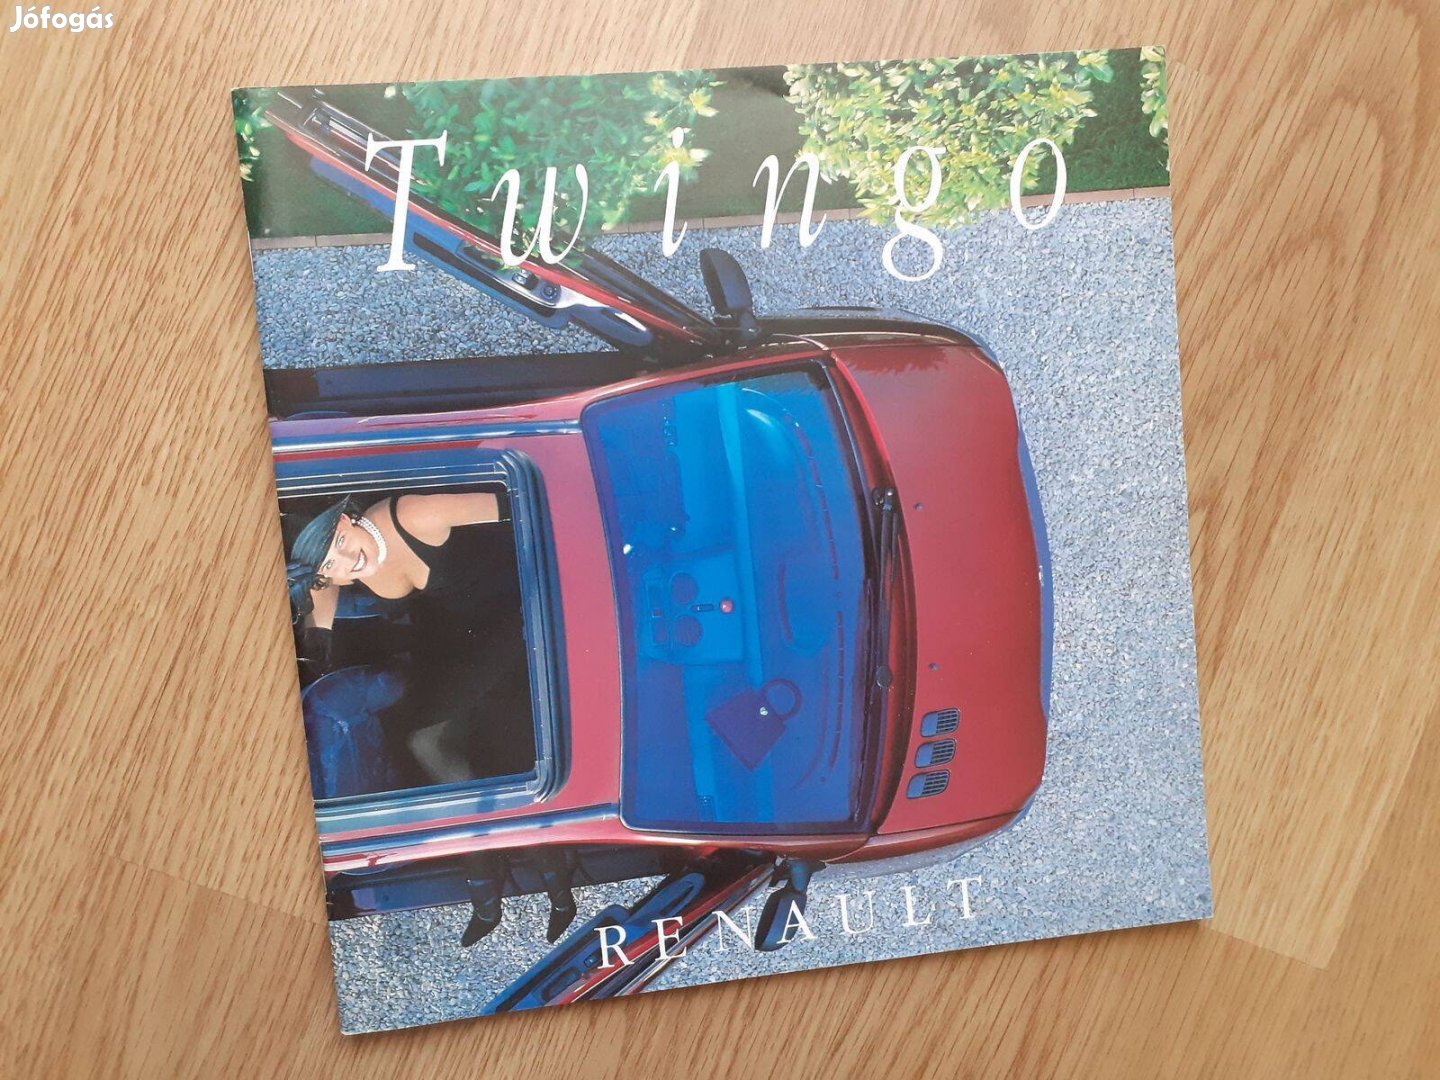 Renault Twingo prospektus - 1995, magyar nyelvű